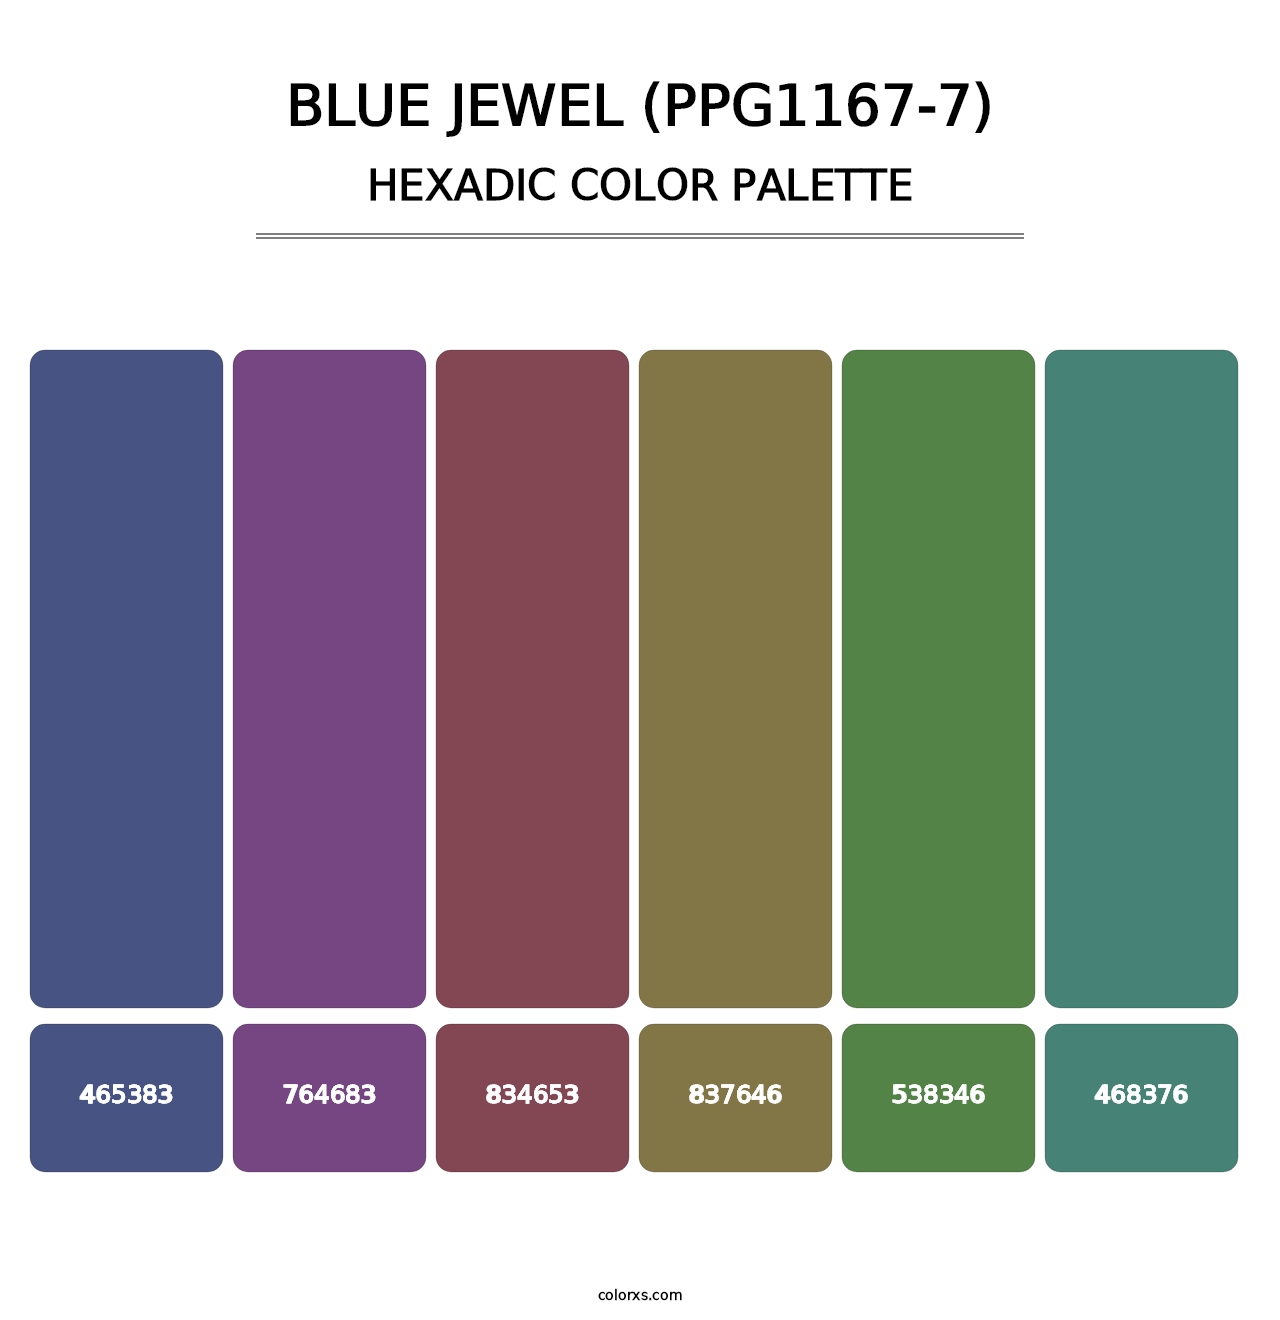 Blue Jewel (PPG1167-7) - Hexadic Color Palette